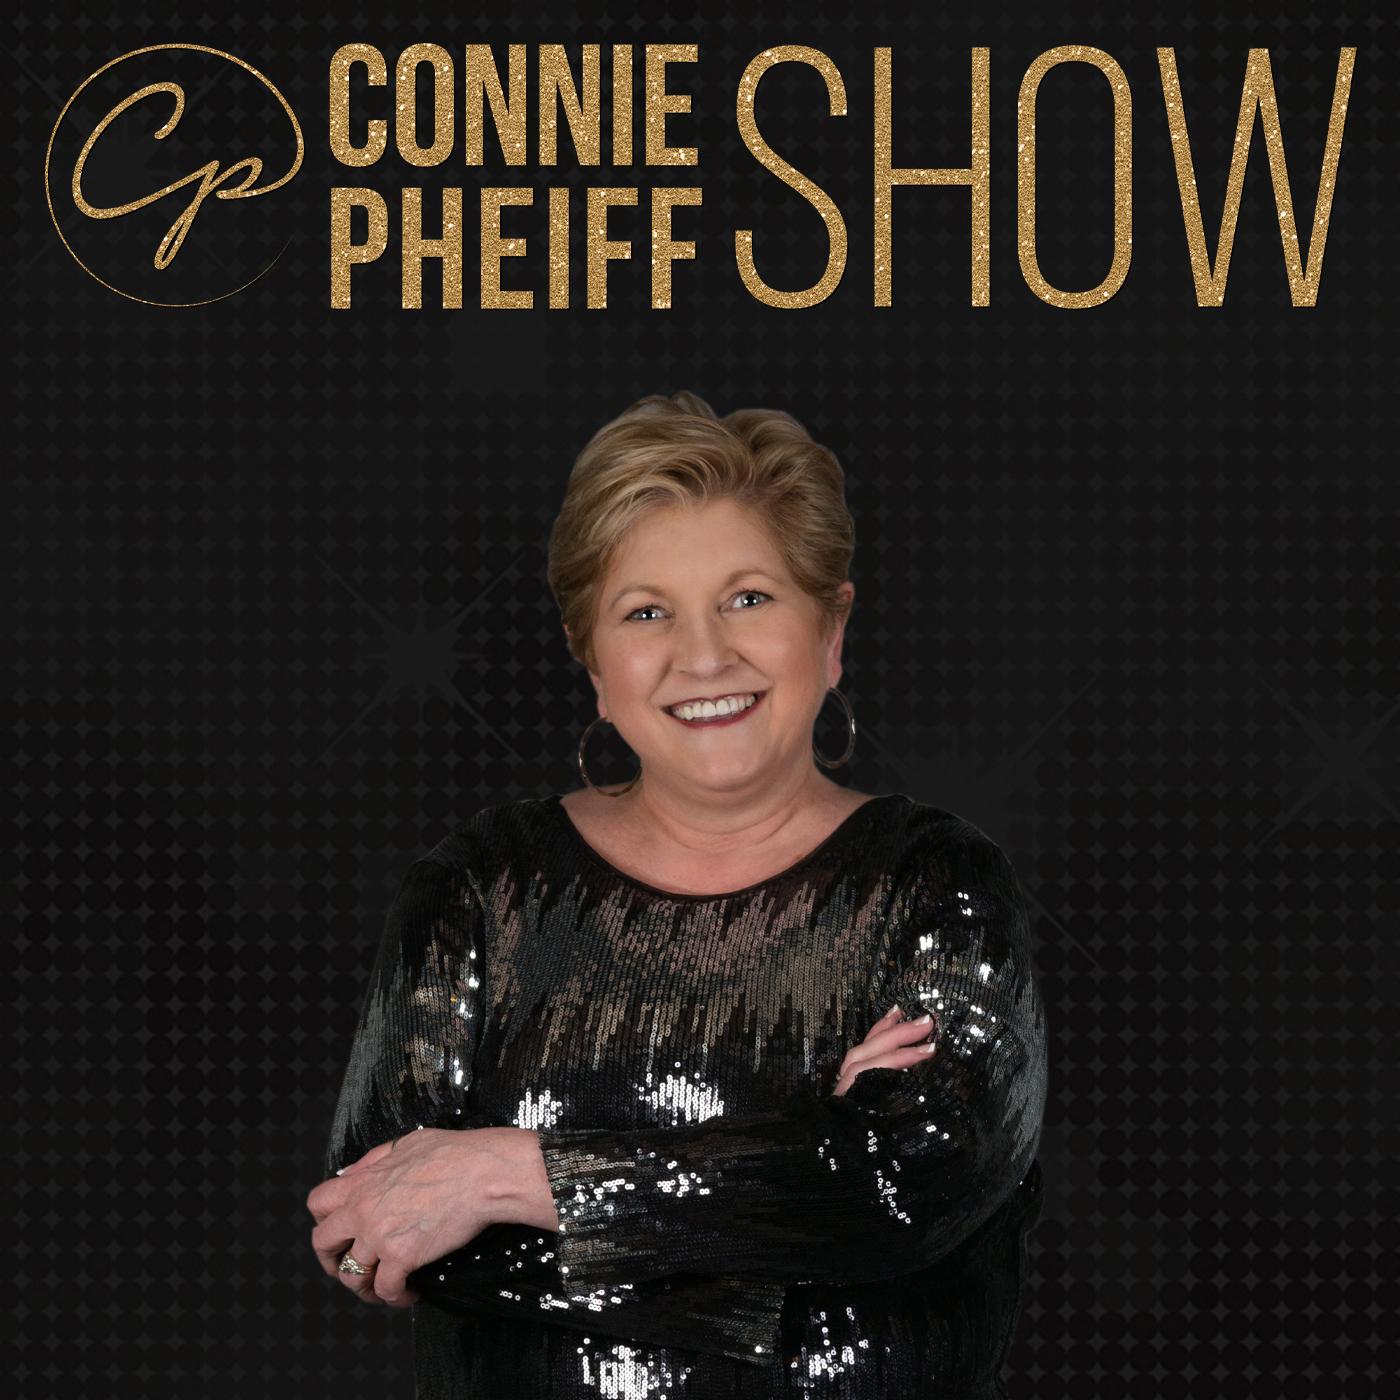 The Connie Pheiff Show